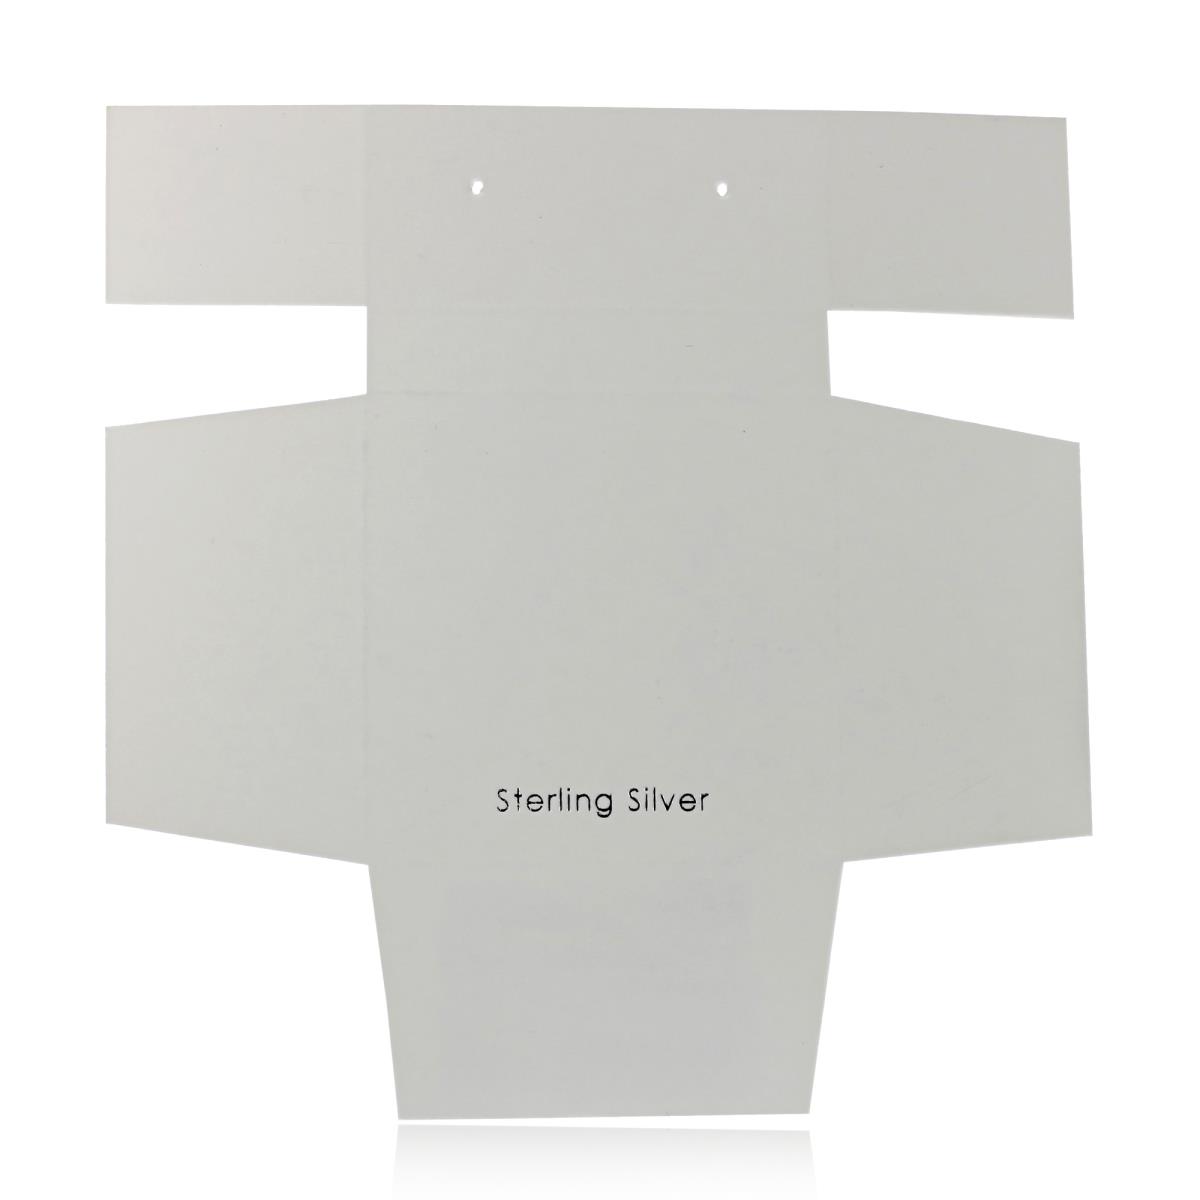 Sterling Silver 64x64x43mm Art Paper 1 Pair of Huggies Box Insert